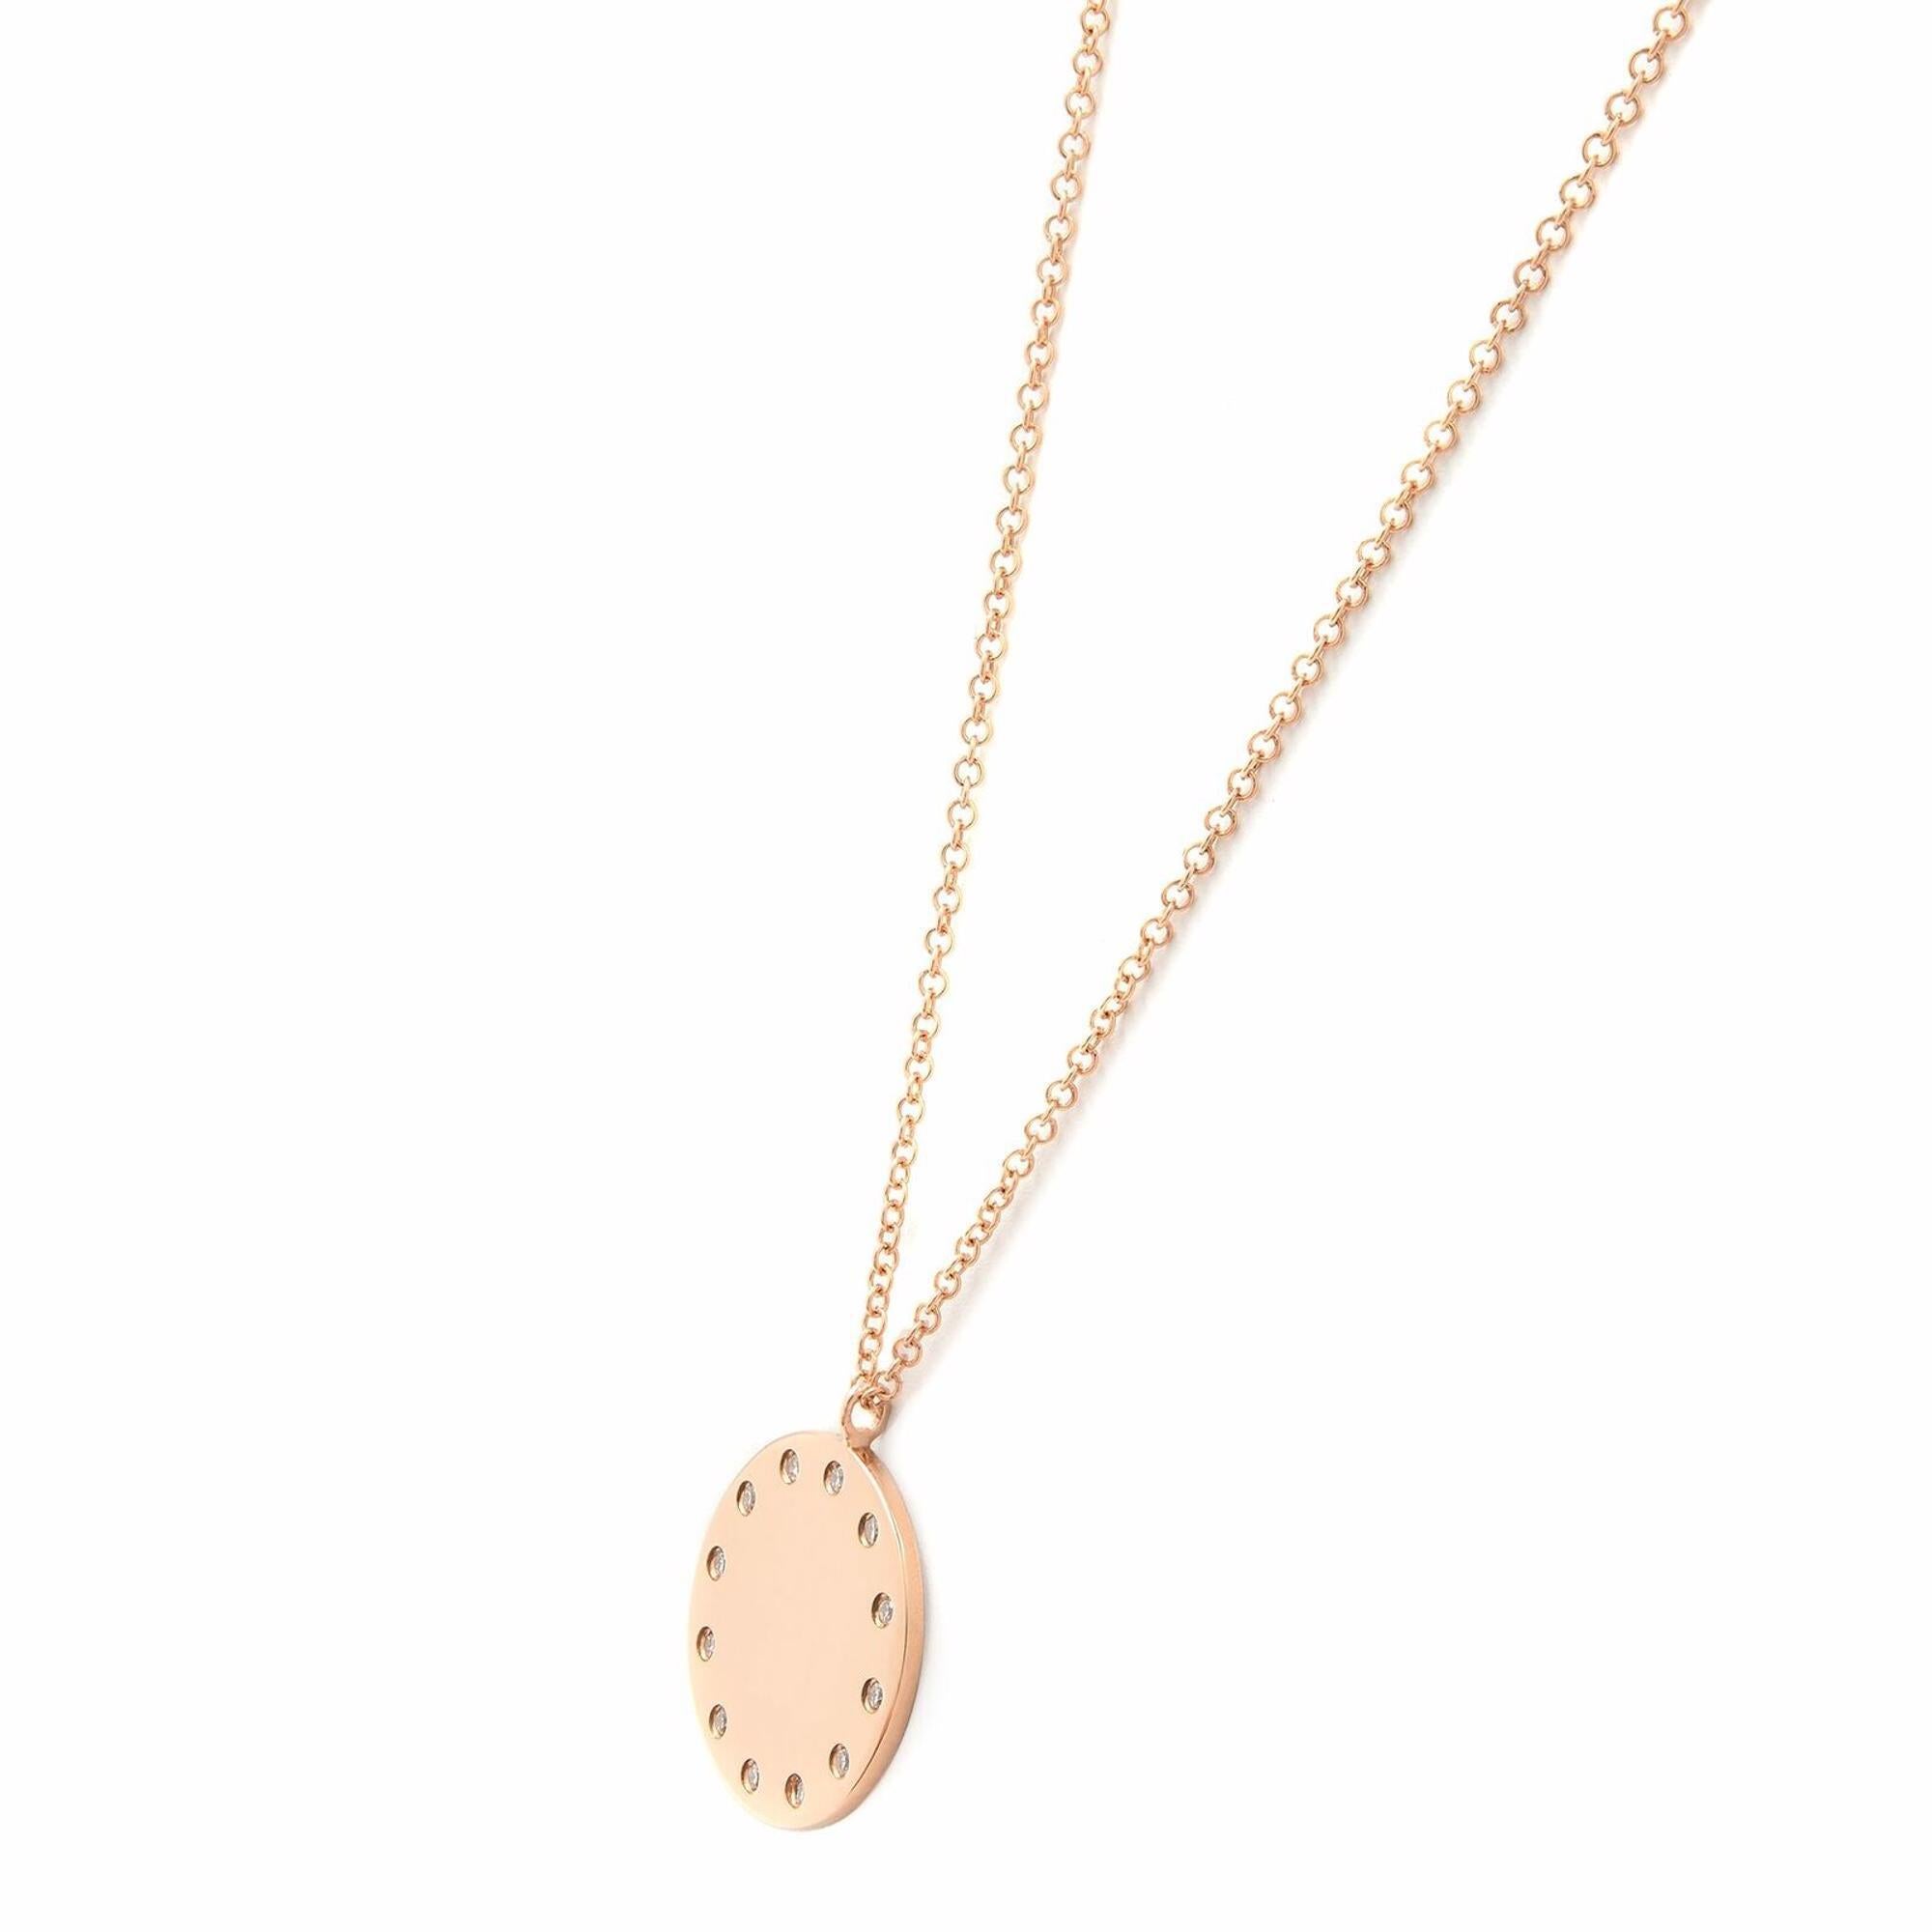 Rachel Koen Round Diamond Circle Disc Pendant Necklace 14K Rose Gold 0.09cttw For Sale 1